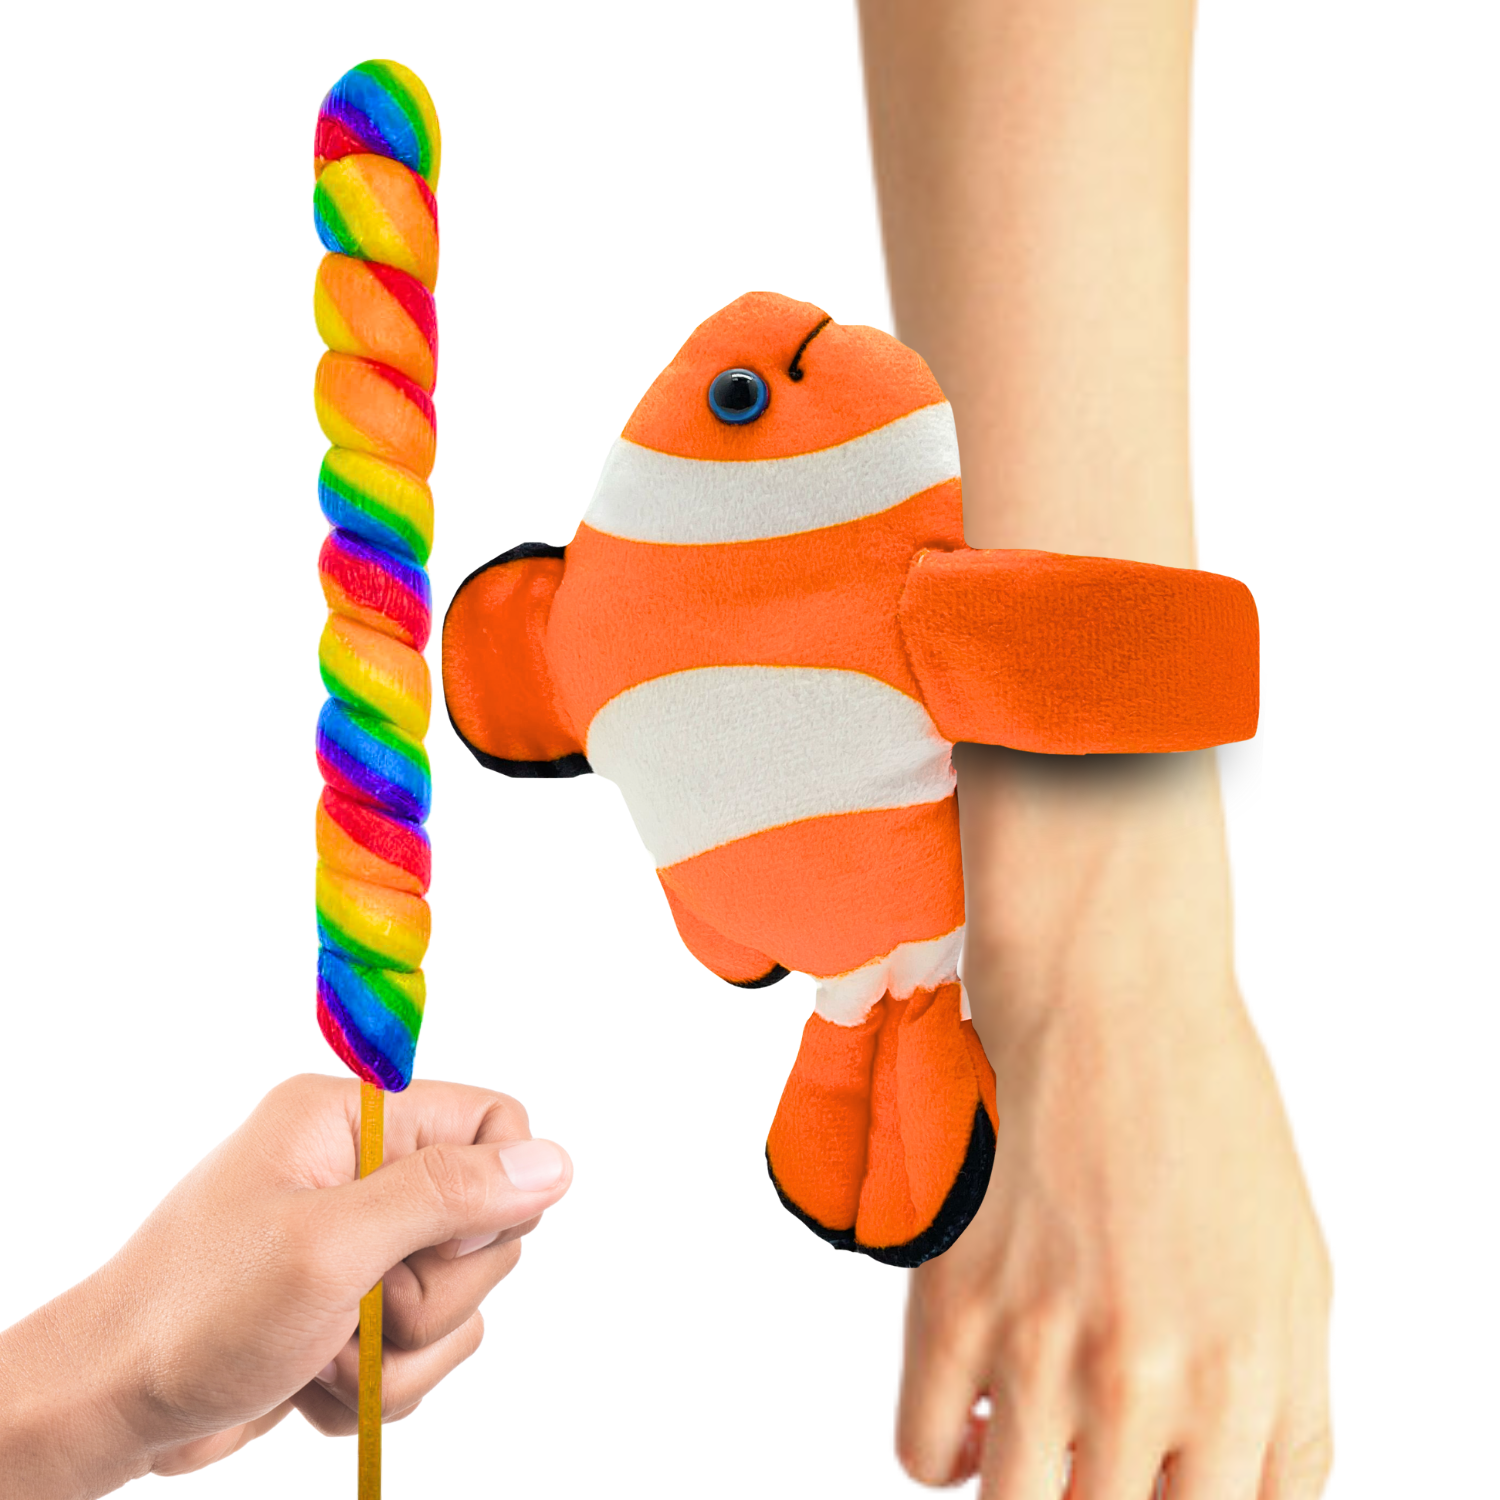 Nemo Slap Bracelet With Lollipop